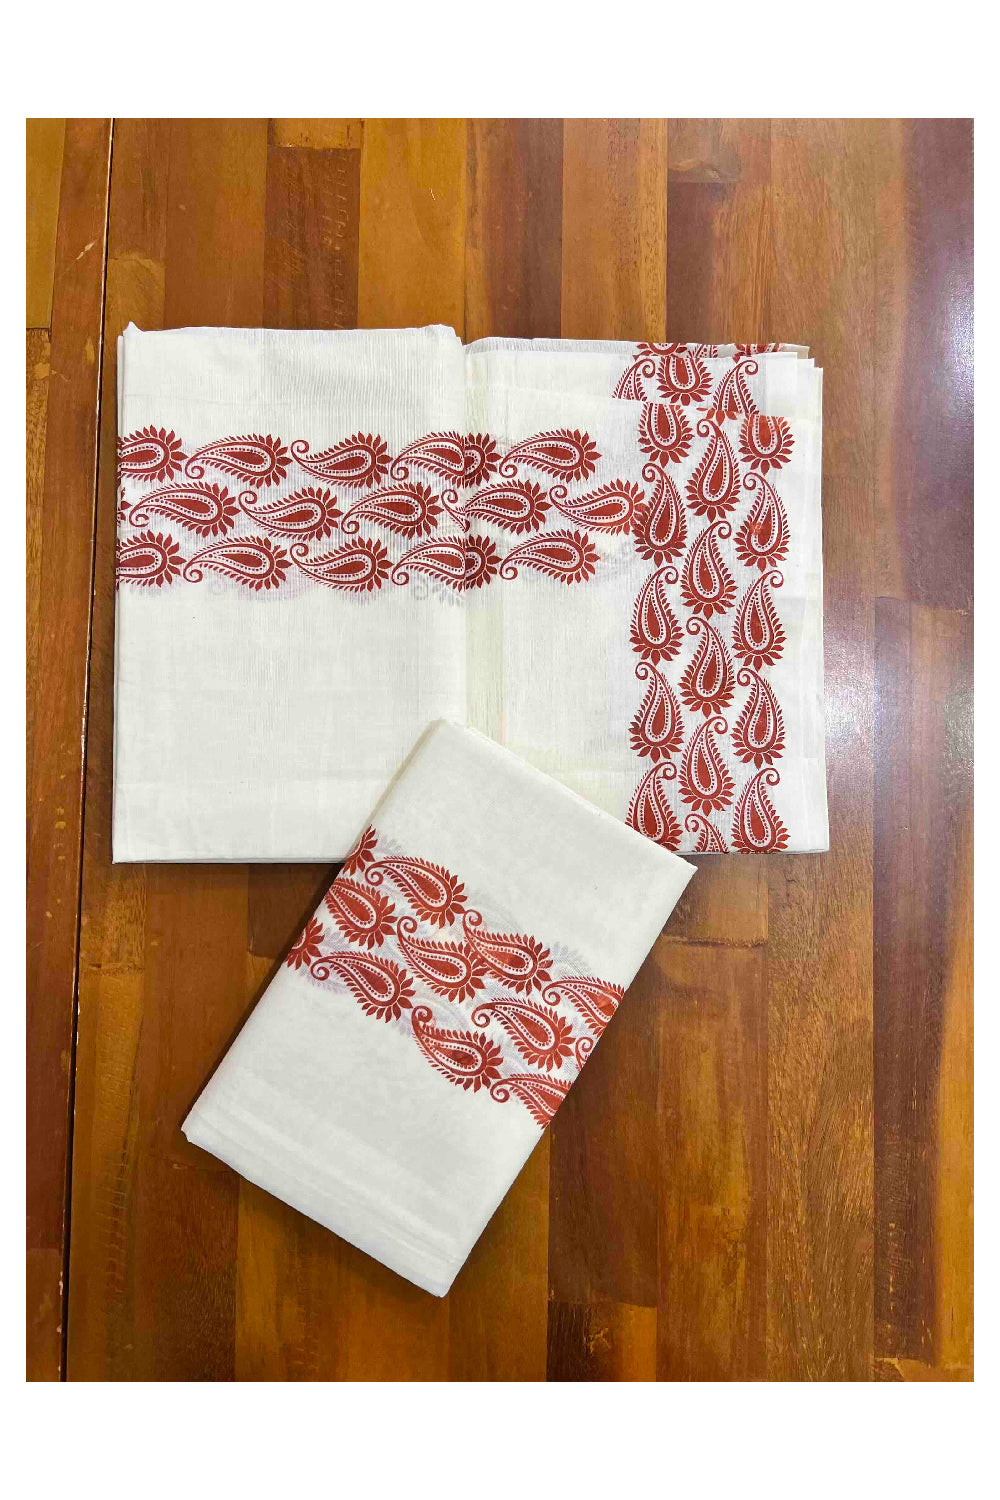 Kerala Cotton Mundum Neriyathum Single (Set Mundu) with Brick Red Paisley Block Prints in Border 2.80 Mtrs